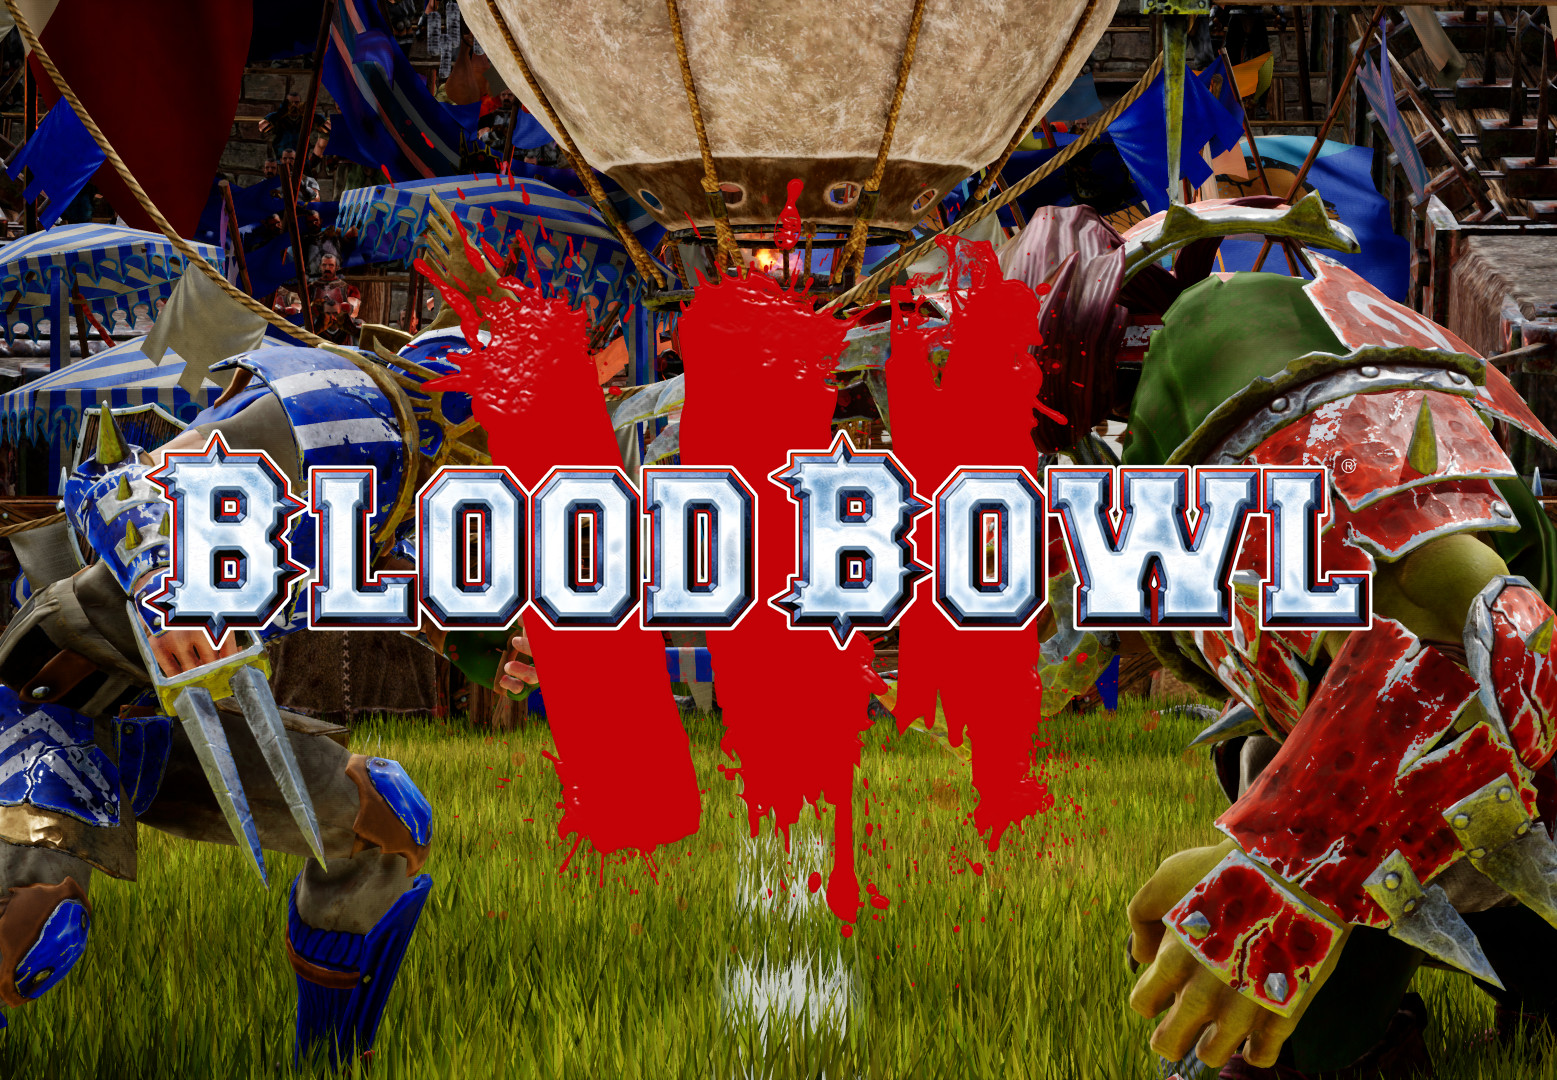 Blood Bowl 3 EU Steam CD Key